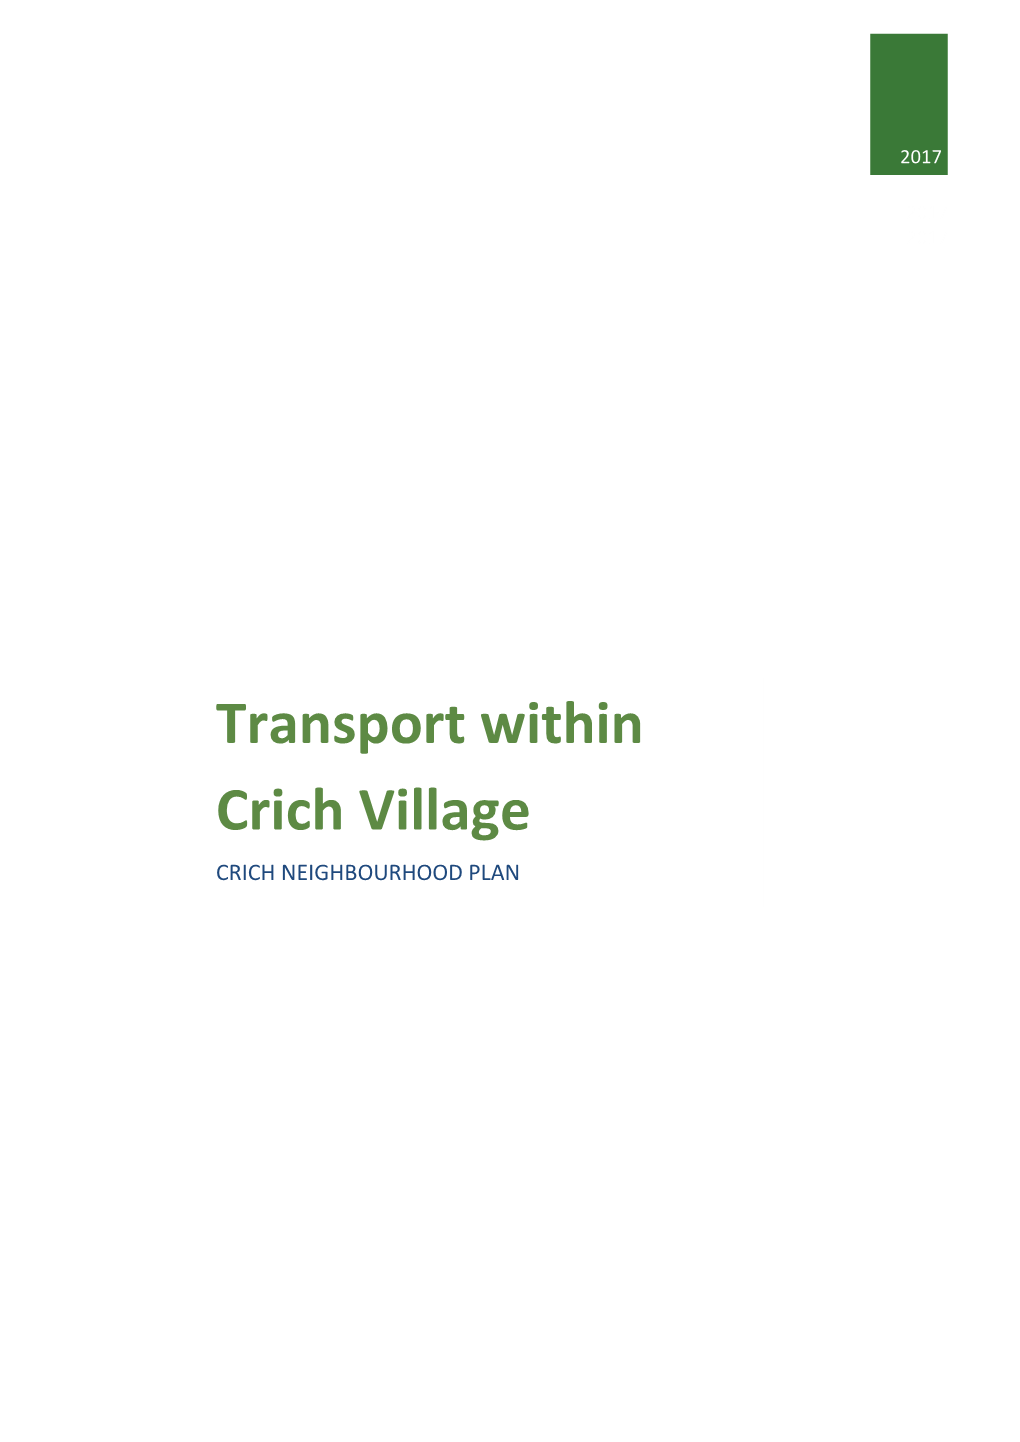 Appendix 5 Transport Within Crich Village